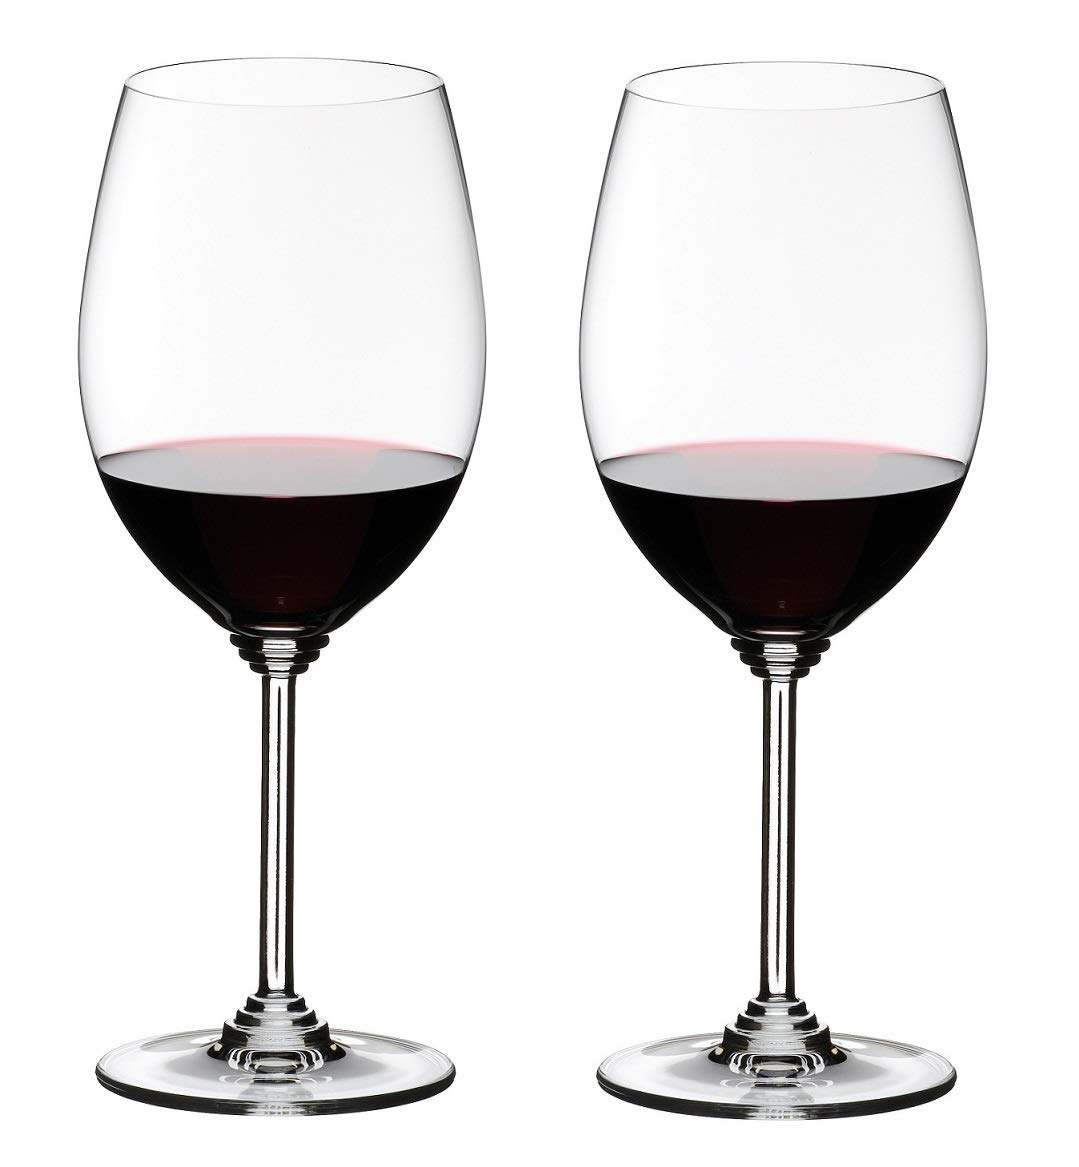 Types of wine glasses - Derwireless